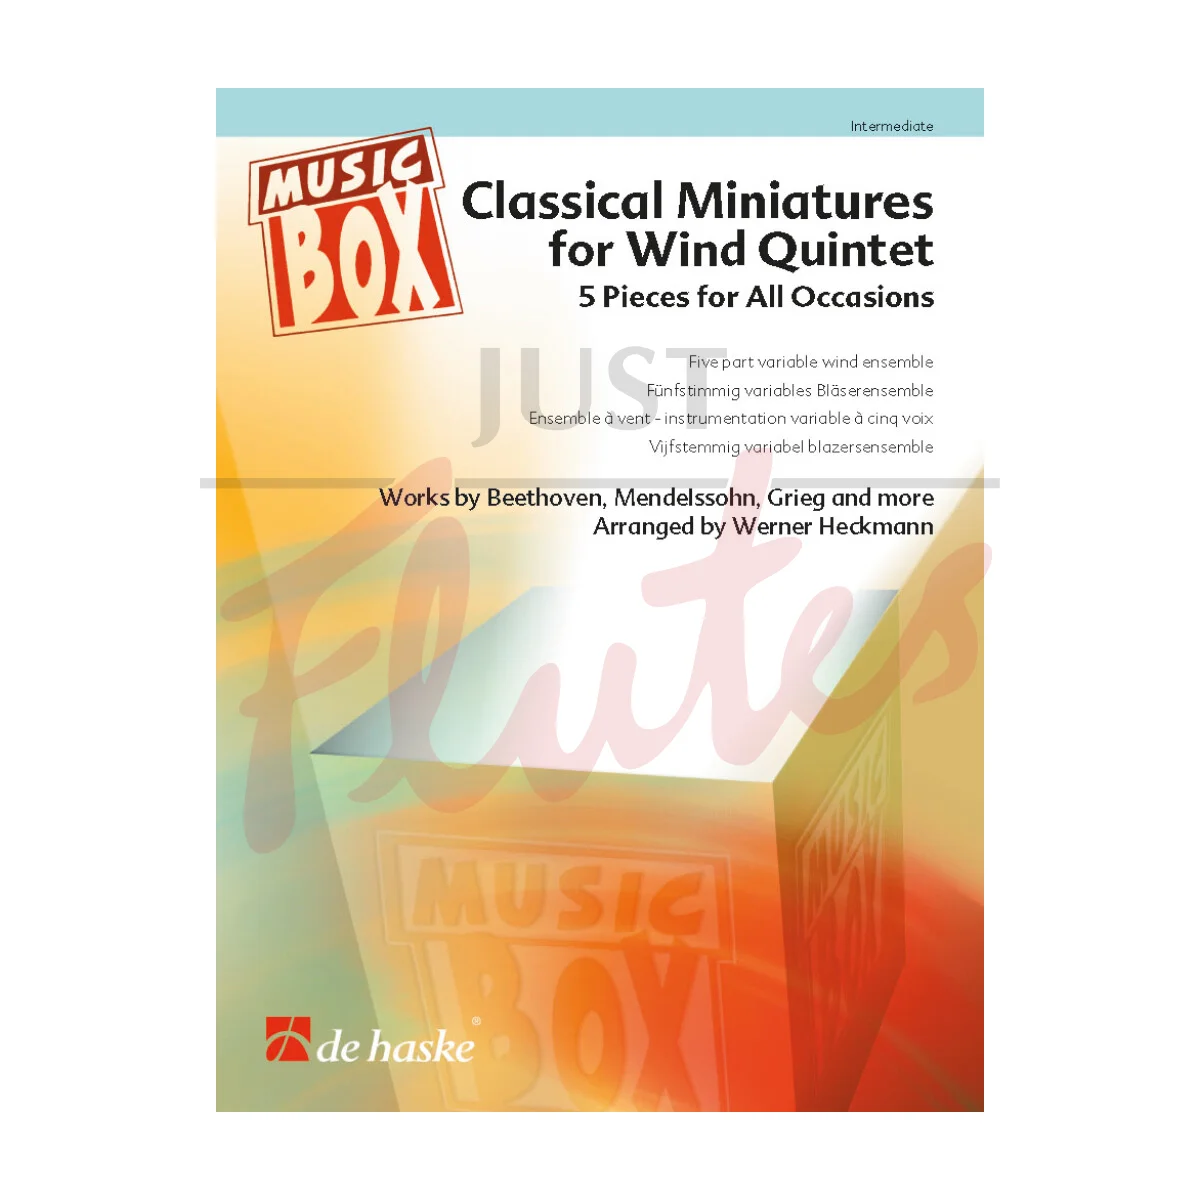 Classical Miniatures for Wind Quintet